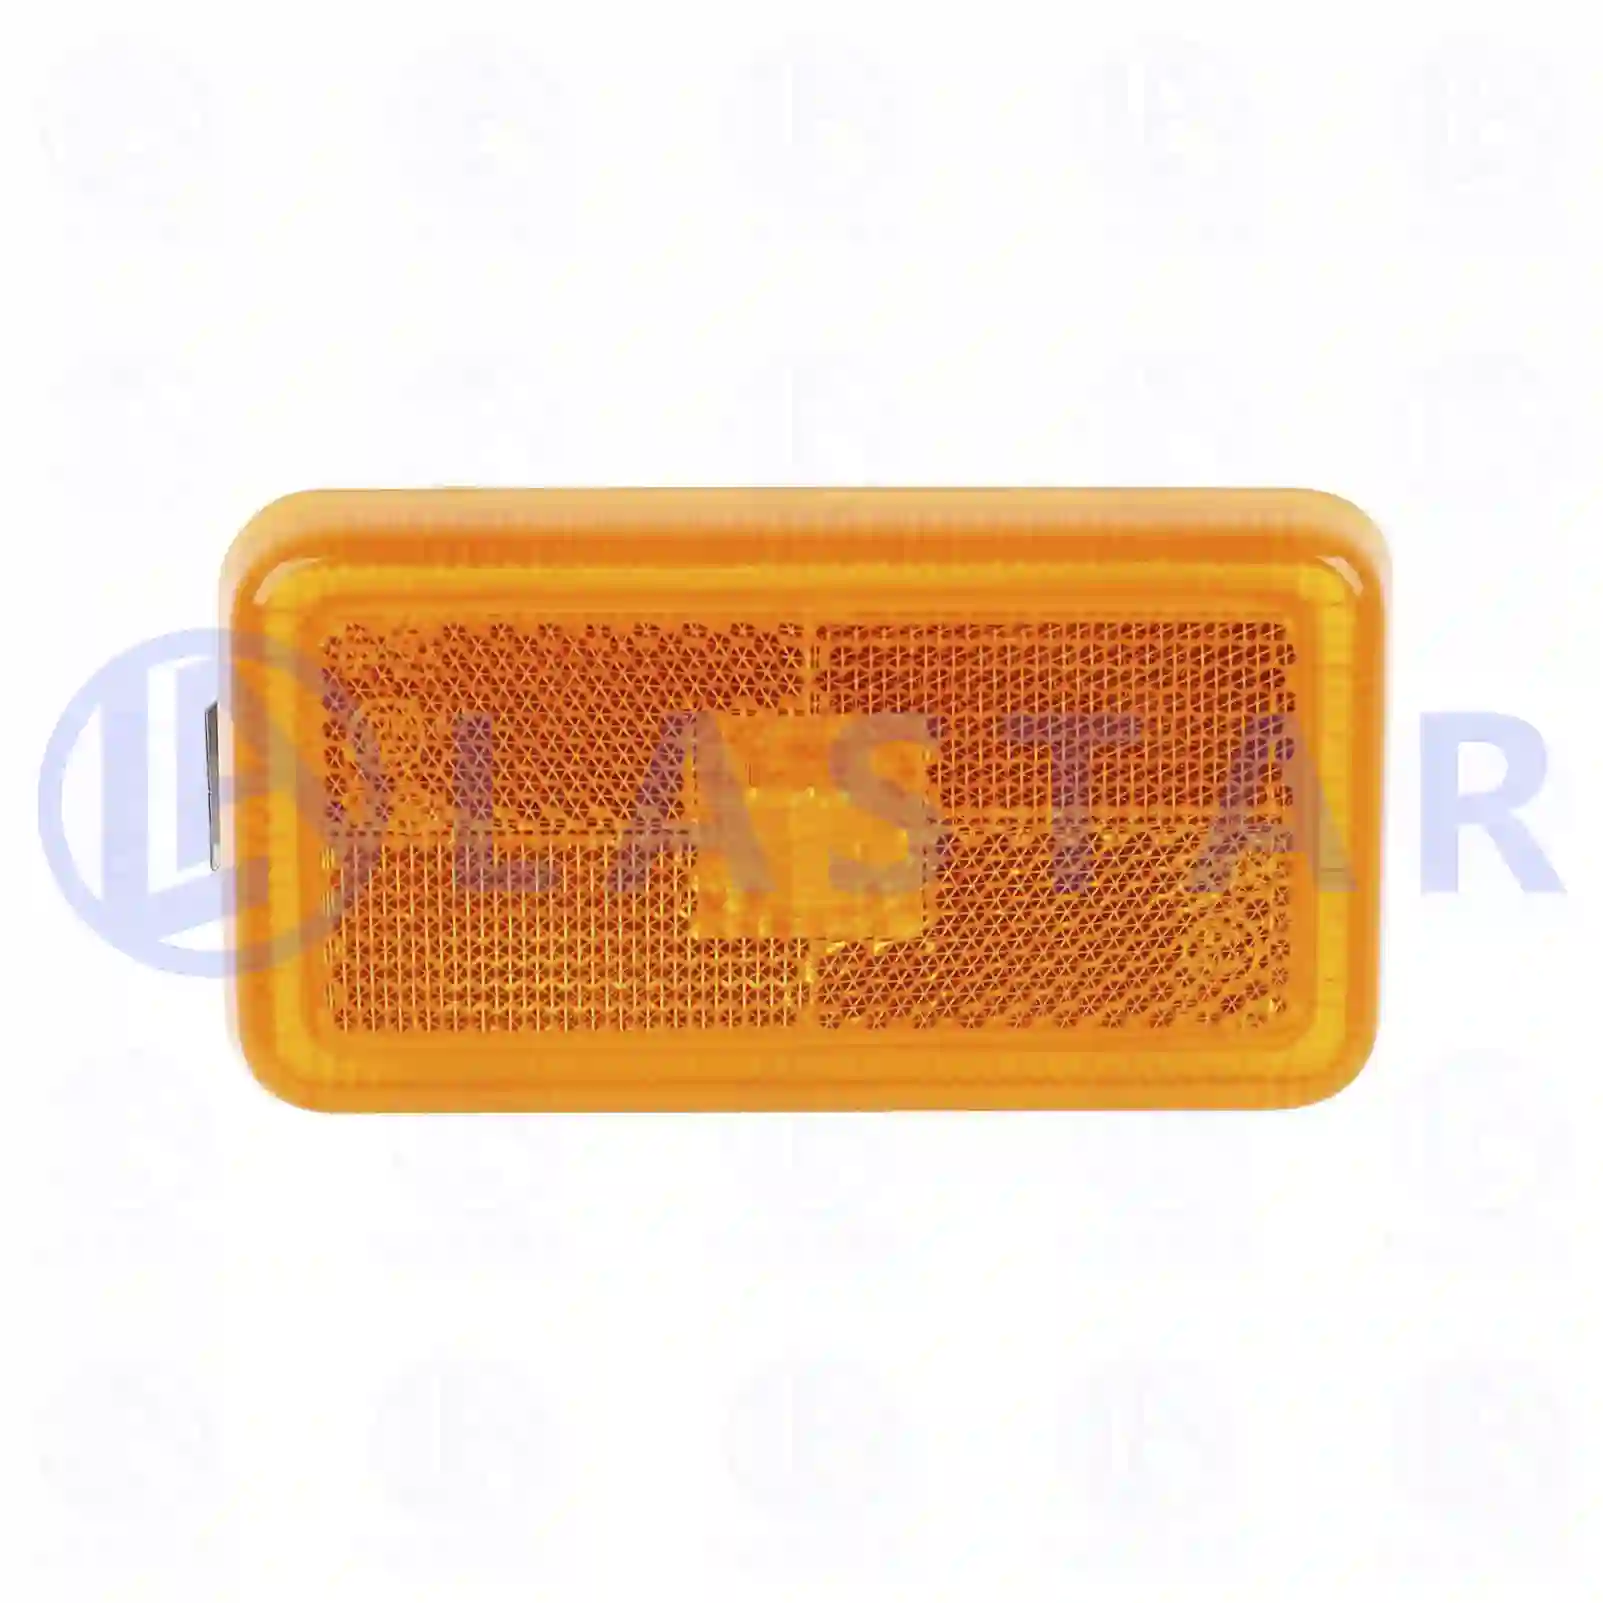 Tail Lamp Reflector, orange, la no: 77712499 ,  oem no:1362707, ZG20769-0008 Lastar Spare Part | Truck Spare Parts, Auotomotive Spare Parts